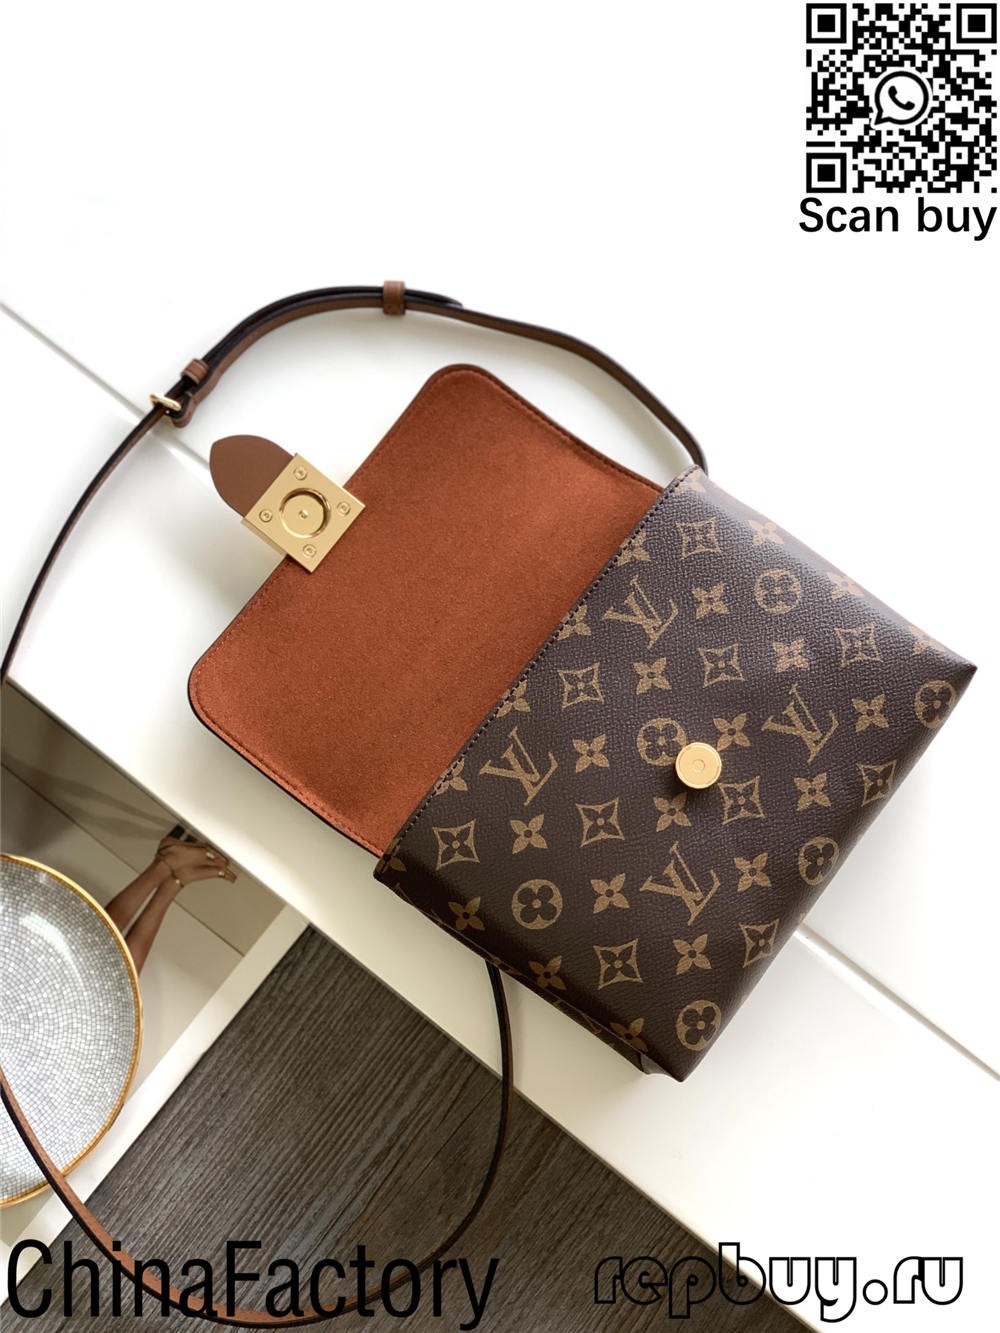 Louis Vuitton's Top 12 بهترين معيار جا ريپليڪا بيگز خريد ڪرڻ لاءِ (2022 اپڊيٽ ٿيل) -Best Quality Fake Louis Vuitton Bag آن لائن اسٽور، Replica designer bag ru